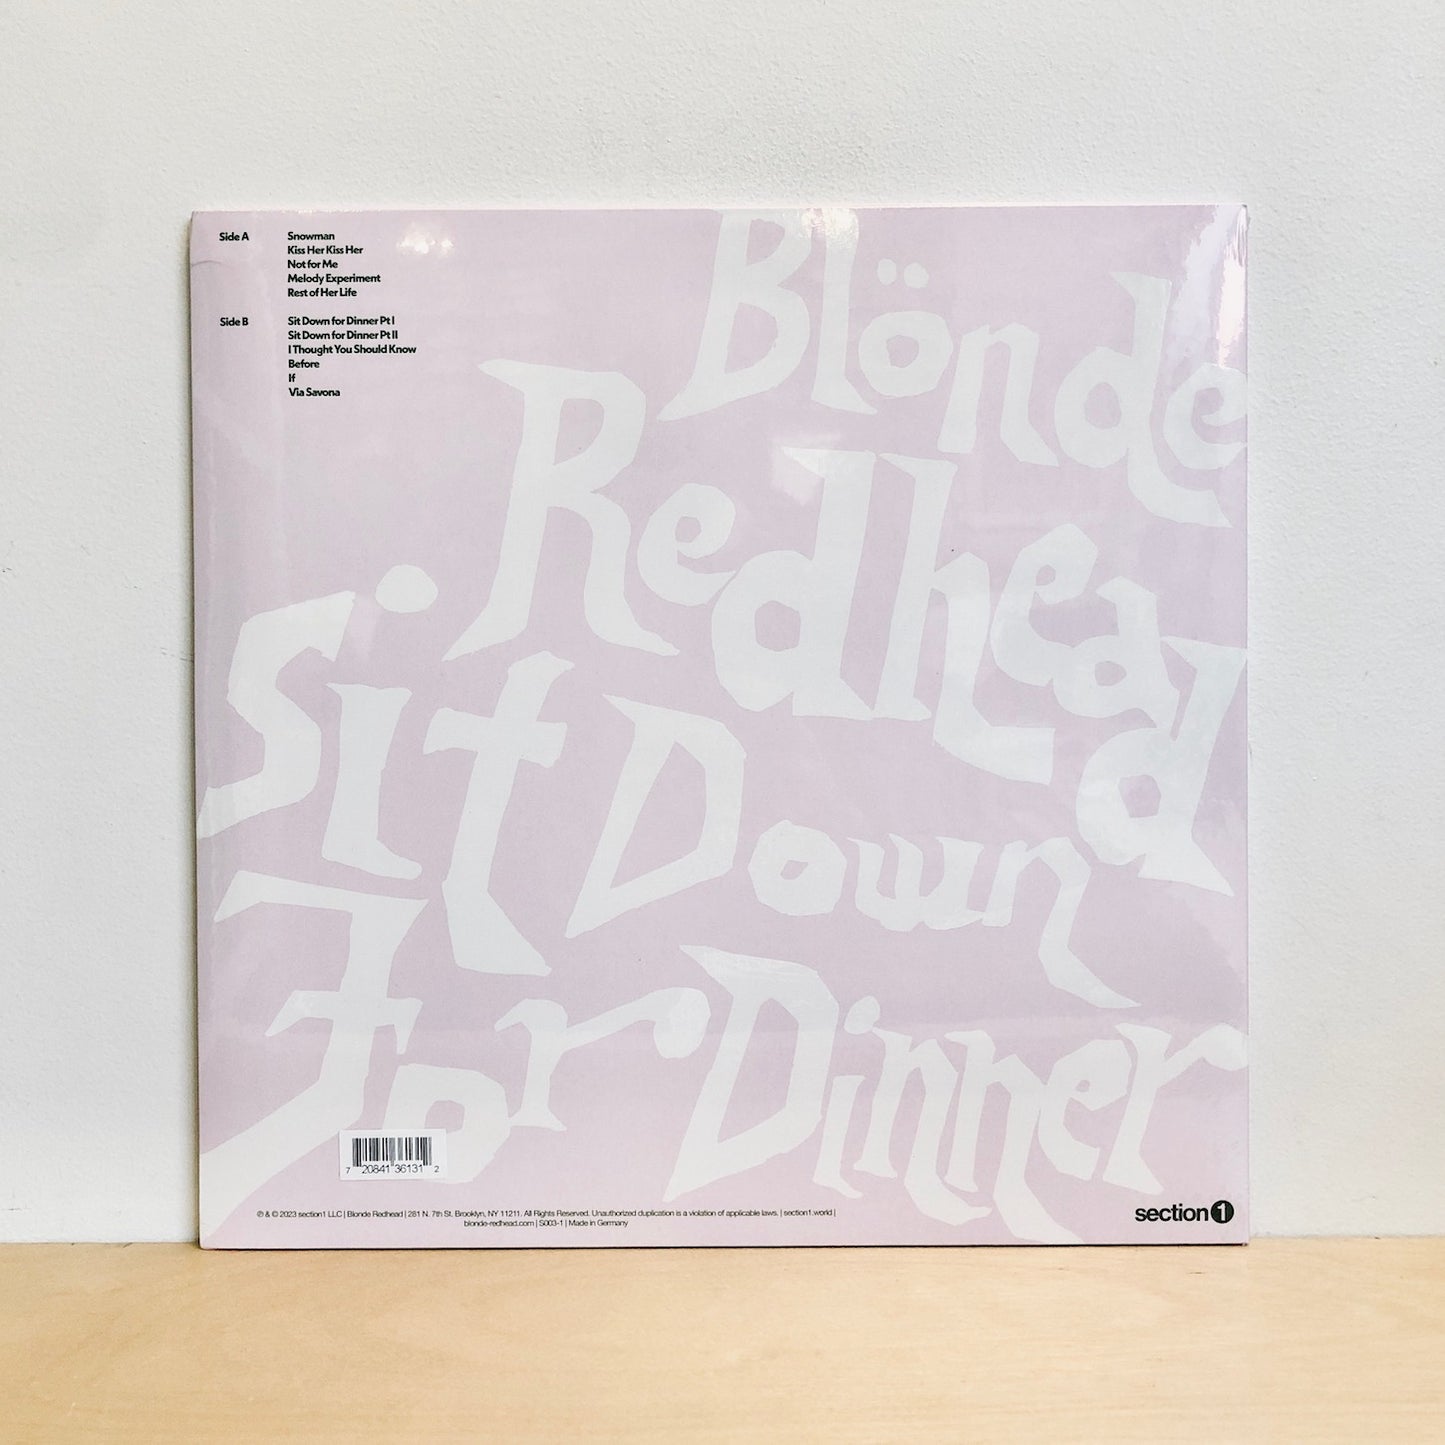 Blonde Redhead - Sit Down For Dinner. LP